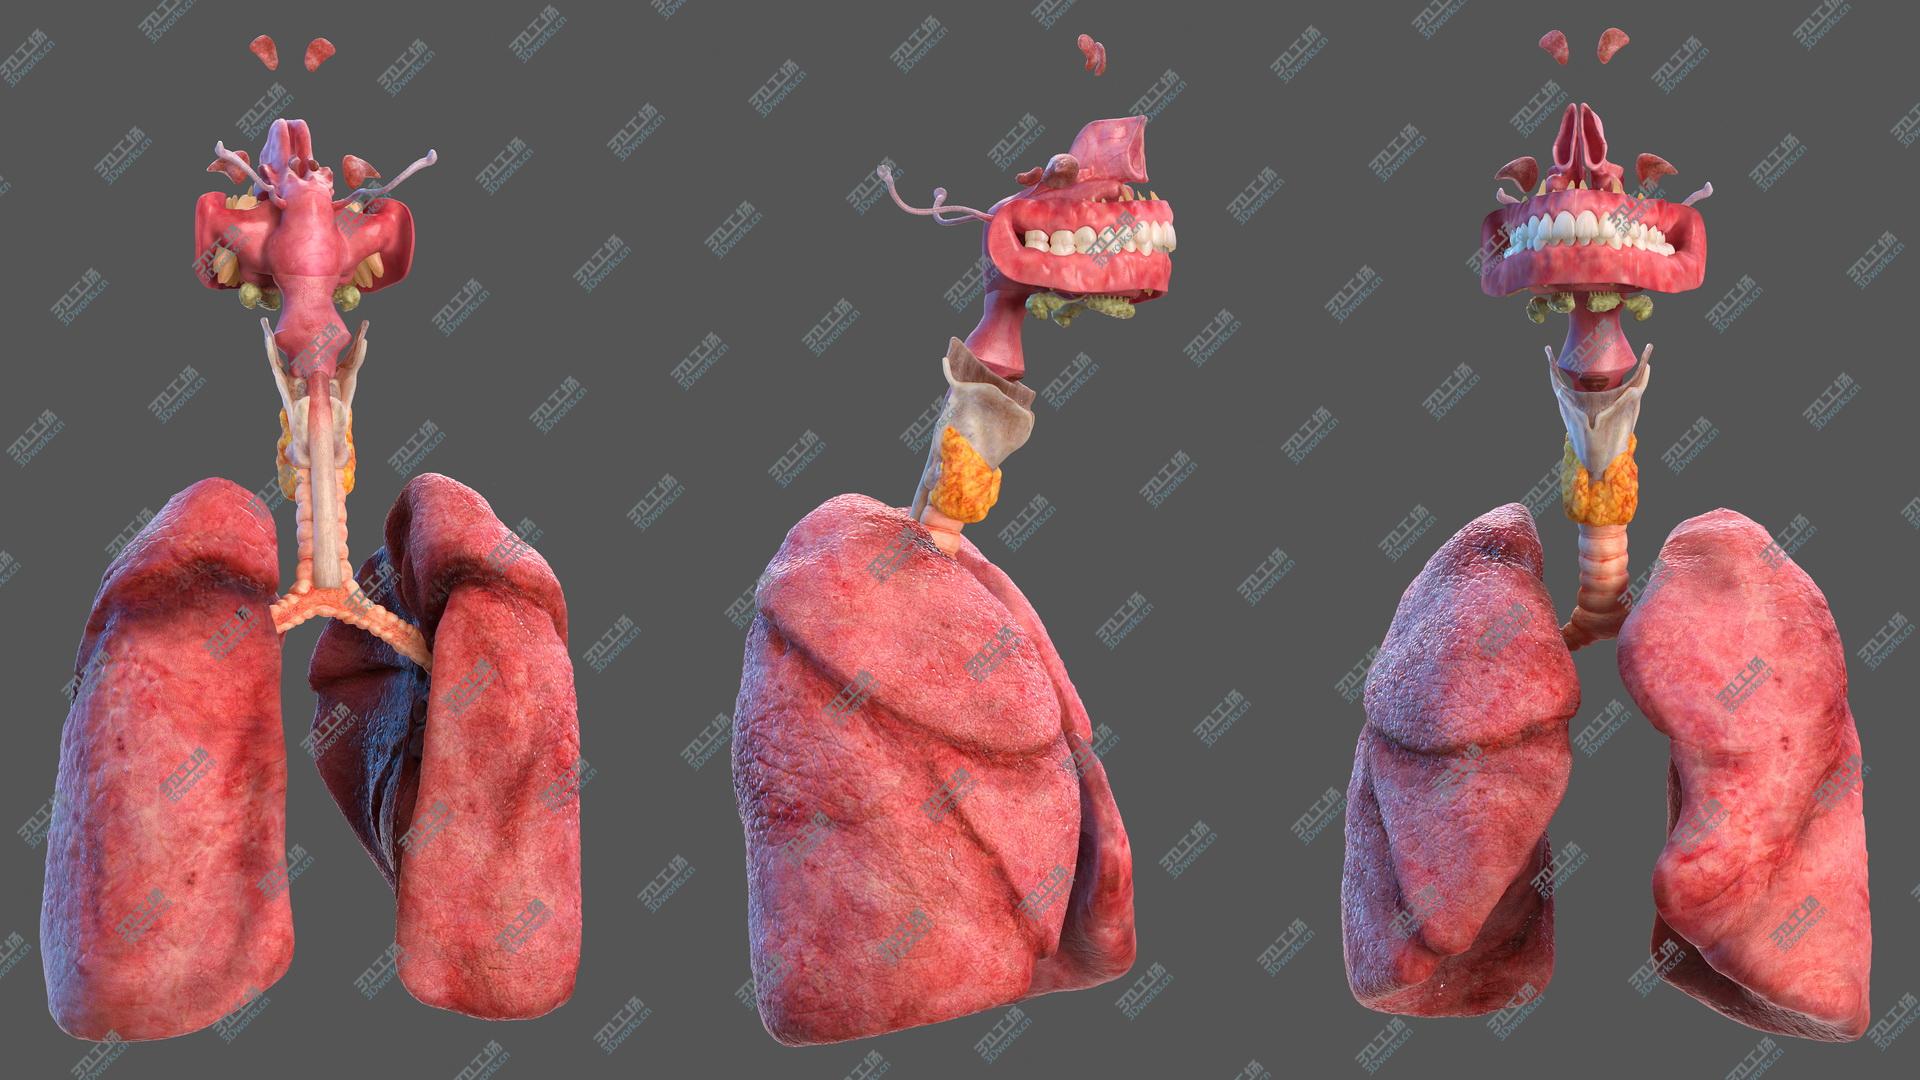 images/goods_img/202105071/3D Human Full Respiratory System/2.jpg